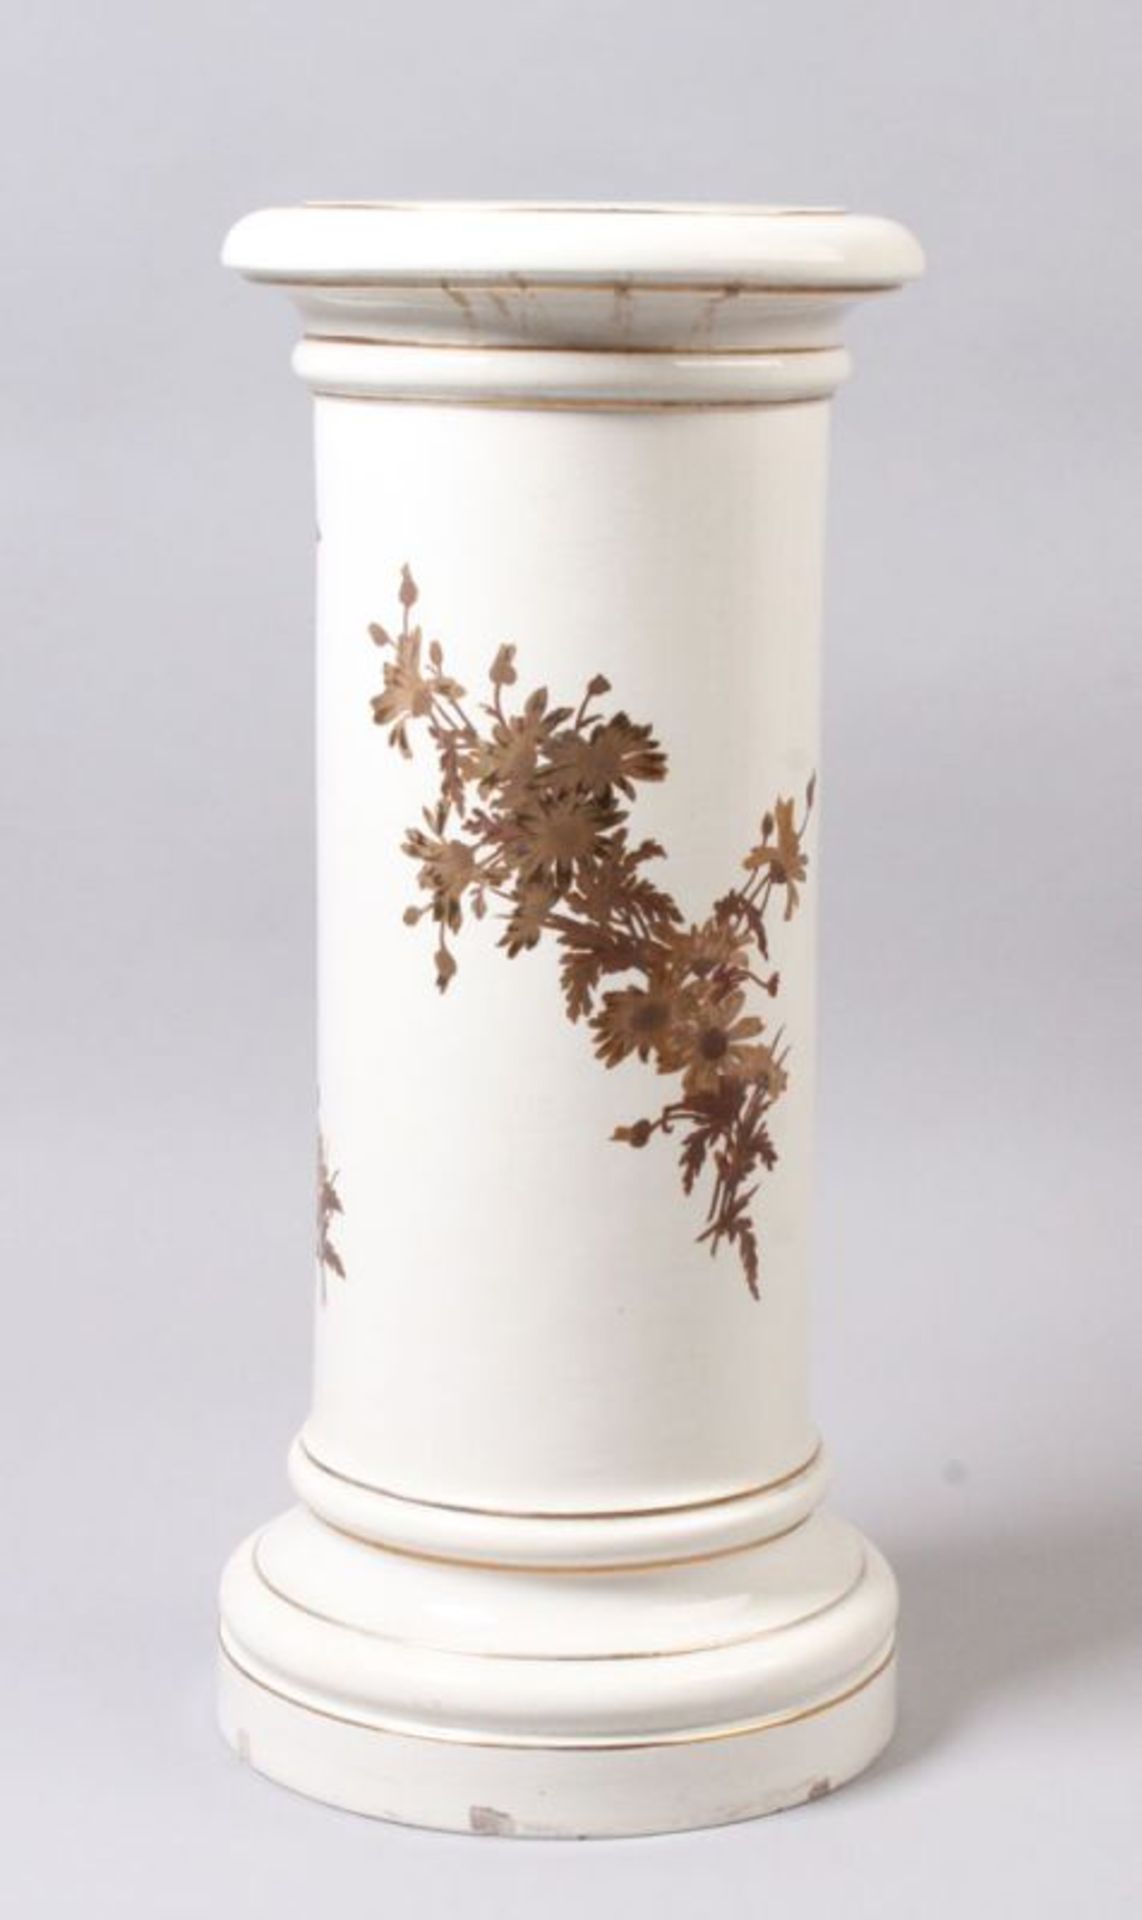 Blumensäule.20. Jh. Keramik. Florale Dekoration. H: 70 cm. 20.00 % buyer's premium on the hammer